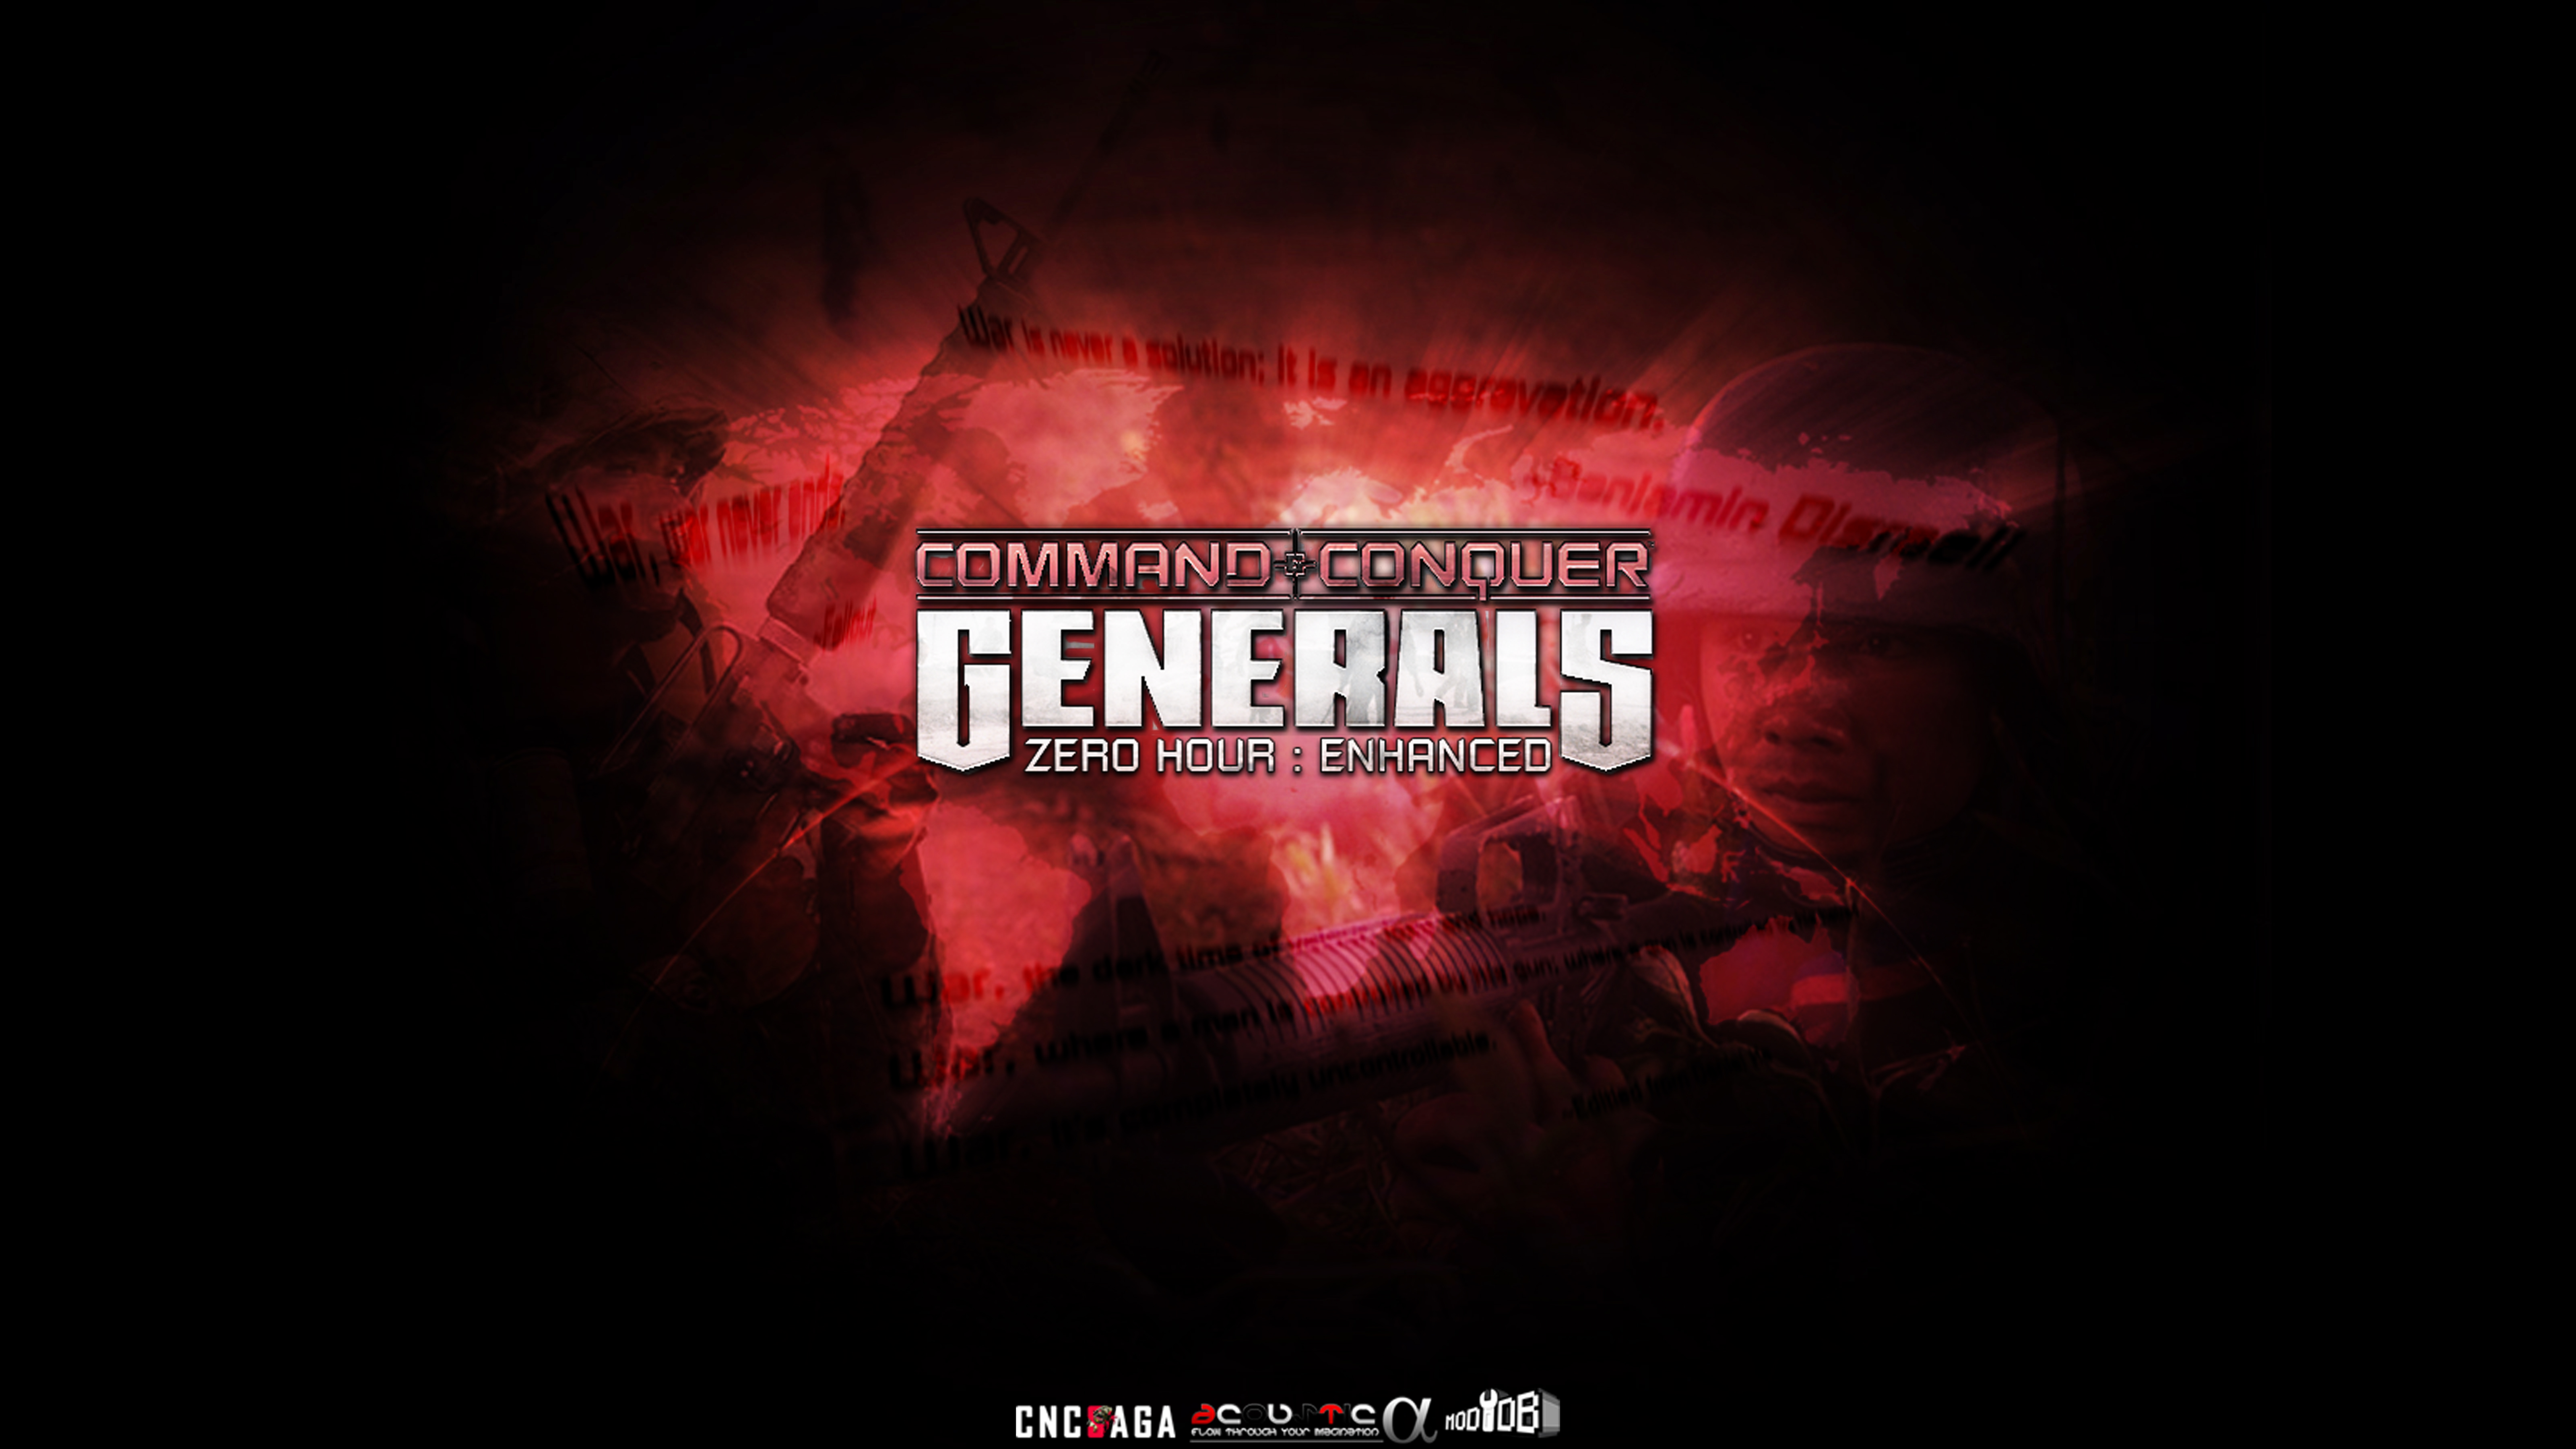 First Mod Wallpaper image&C Generals Zero Hour: Enhanced mod for C&C: Generals Zero Hour